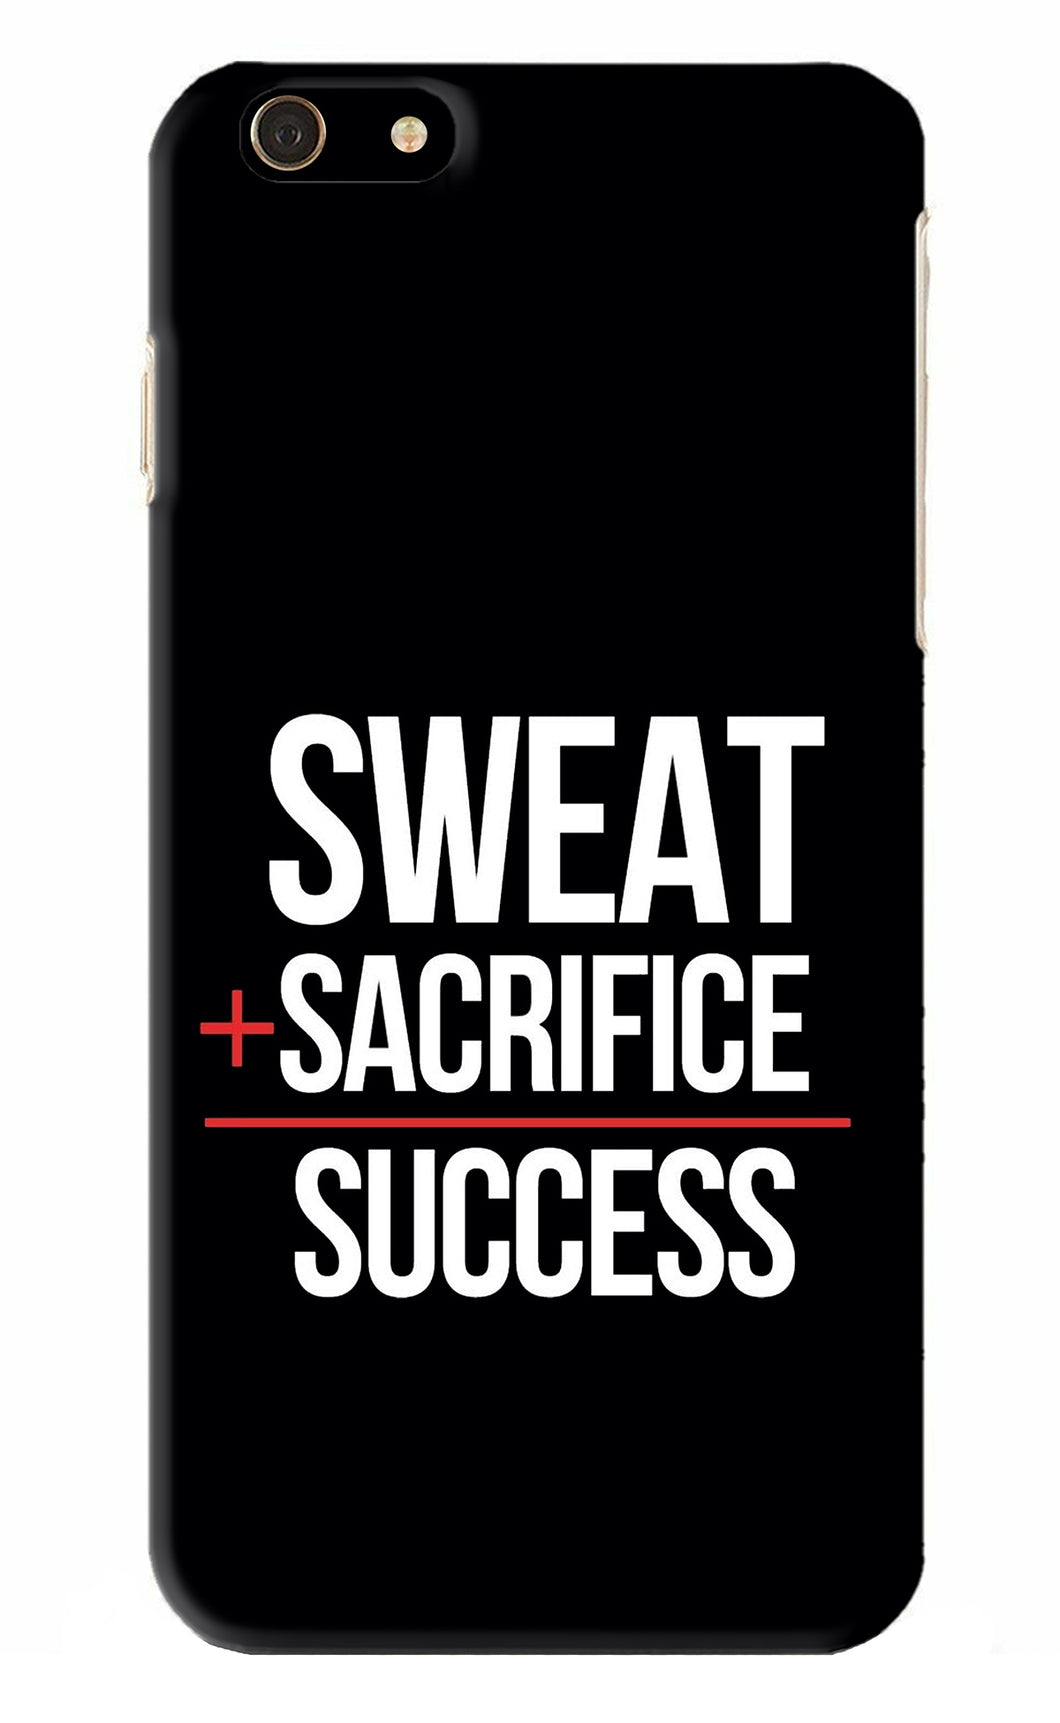 Sweat Sacrifice Success iPhone 6S Plus Back Skin Wrap